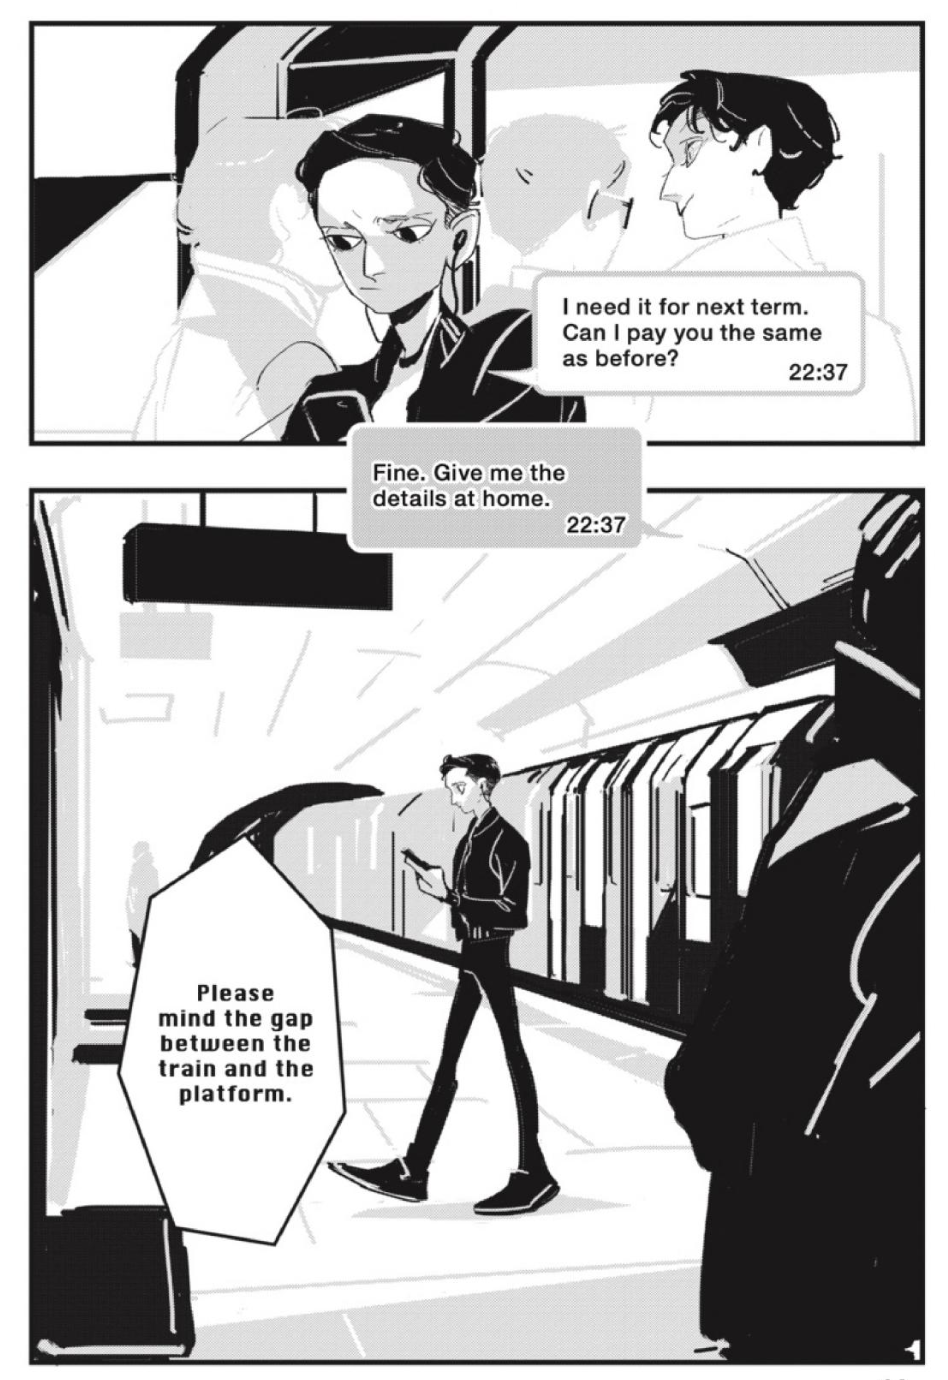 Lost Lad London vol 1 page 14